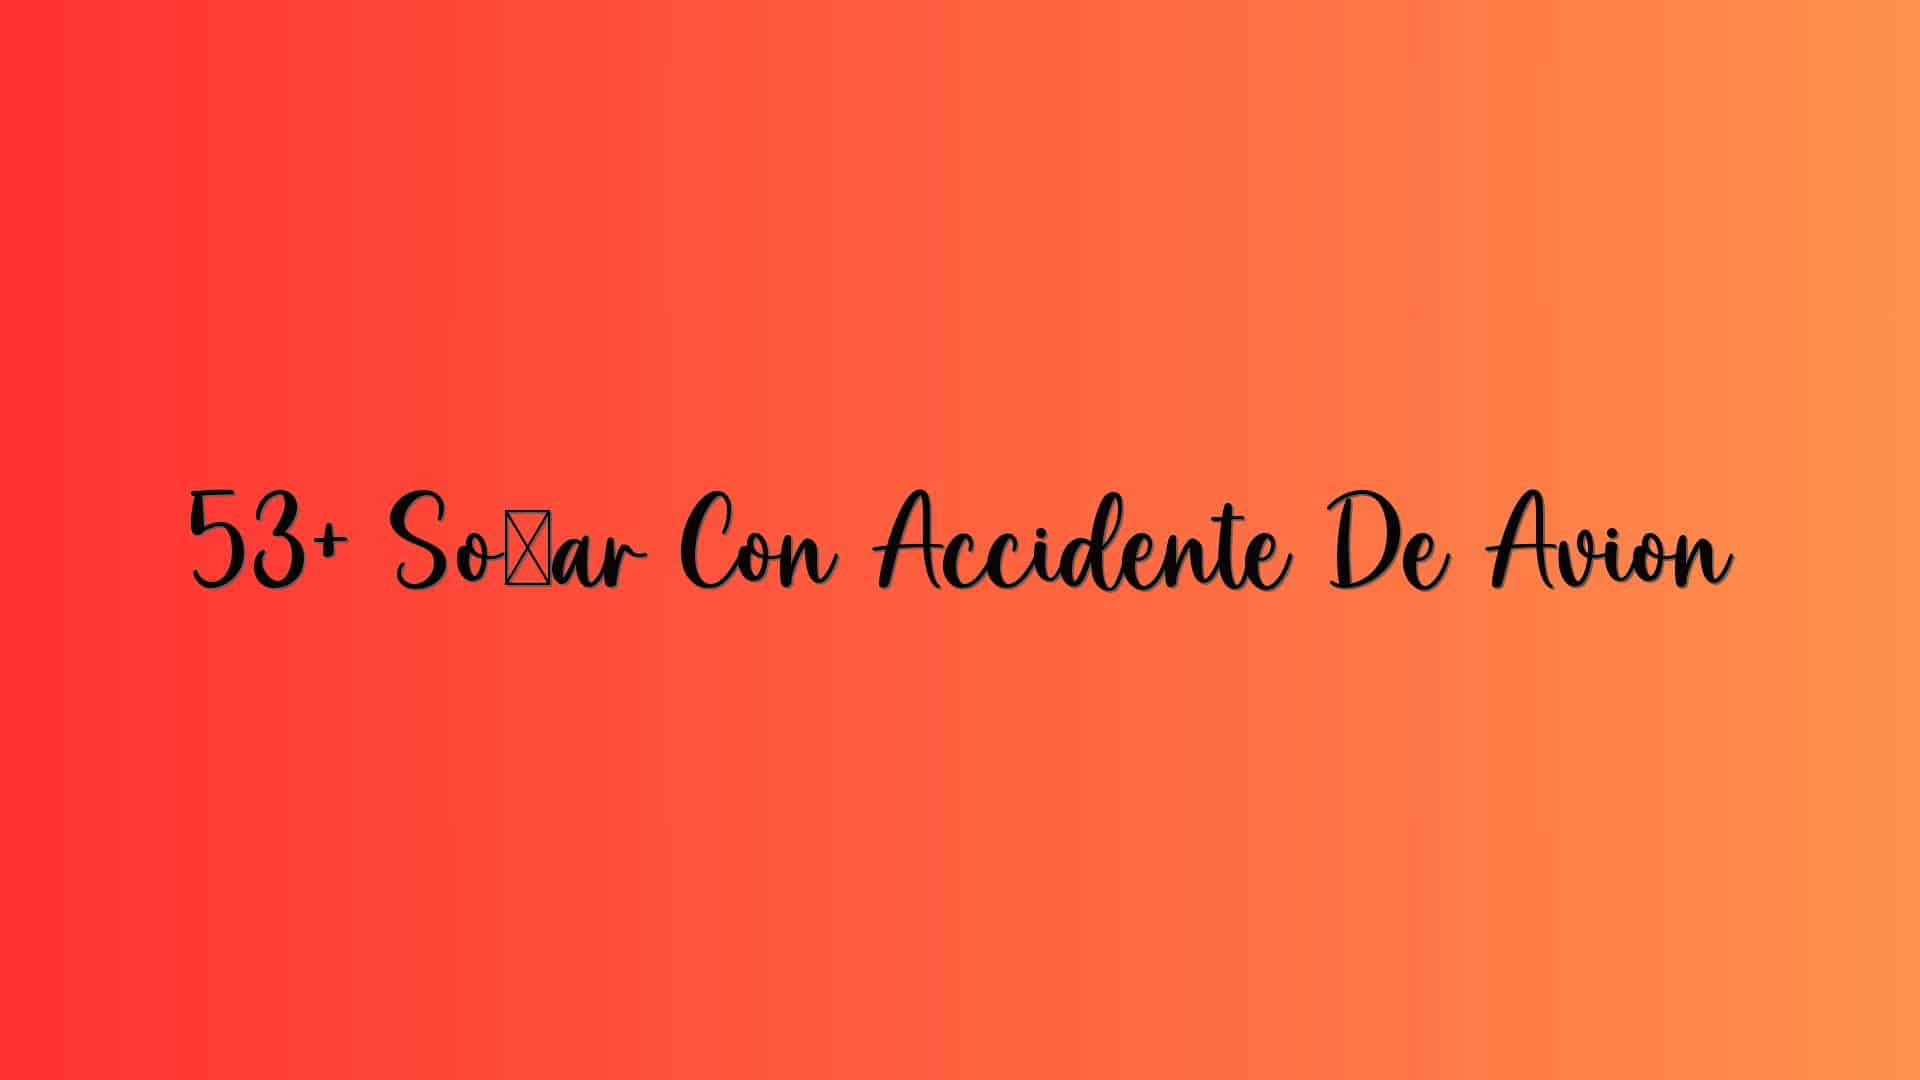 53+ Soñar Con Accidente De Avion